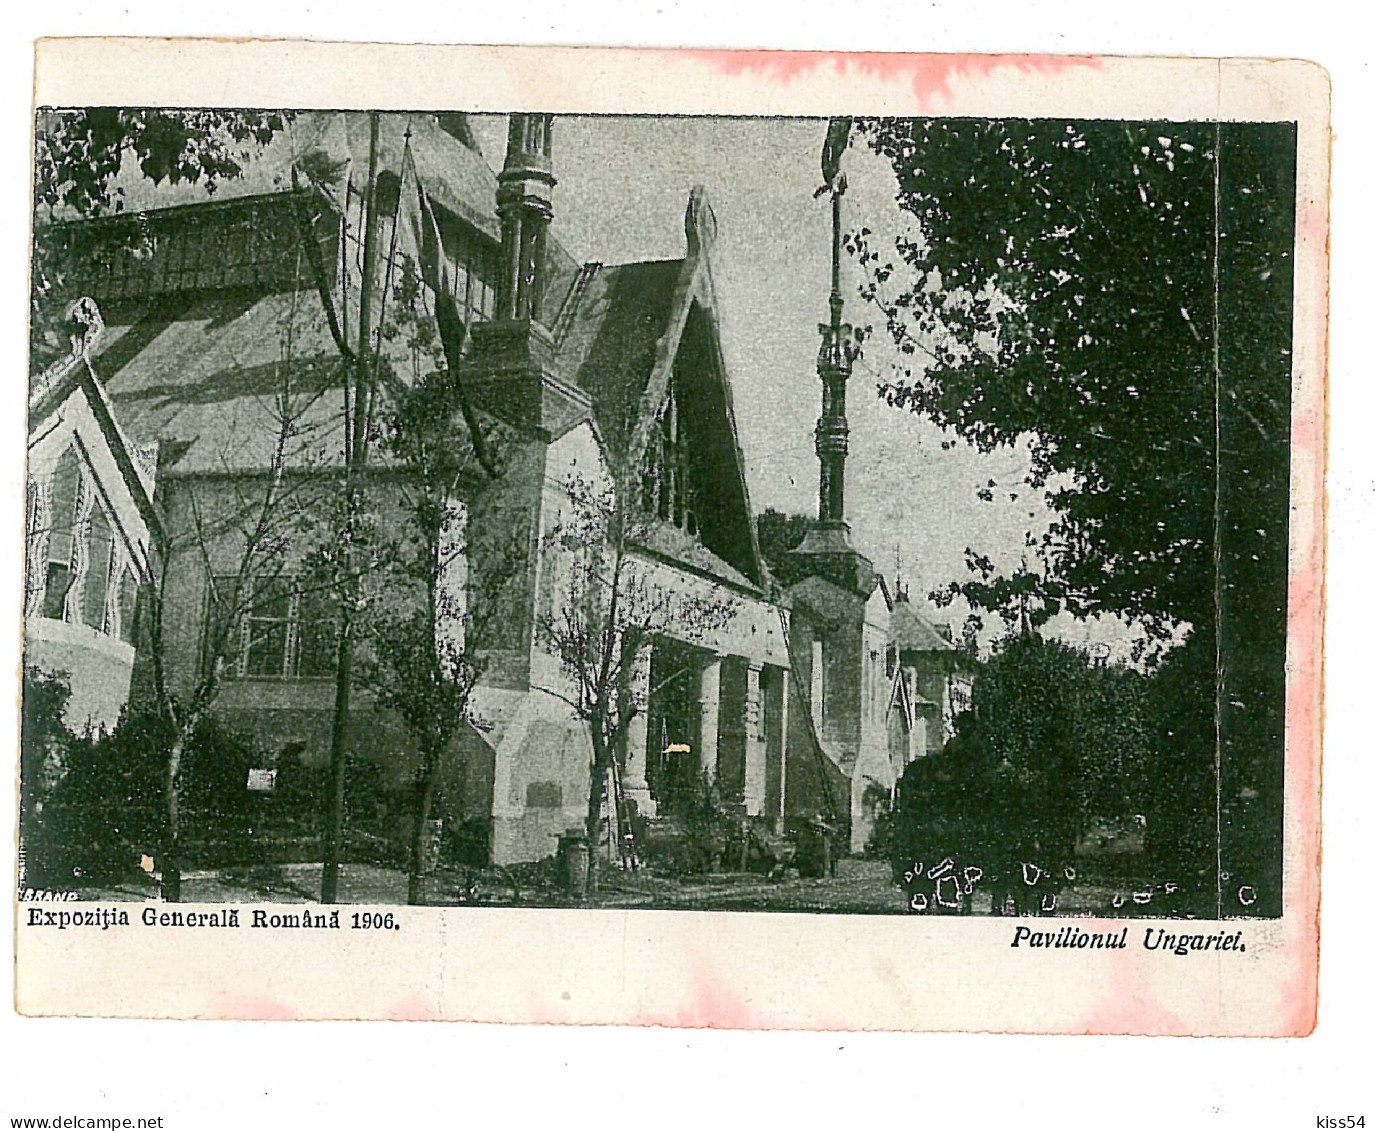 RO 45 - 9047 BUCURESTI, Expozitia Gen. Pavilionul Ungariei, Romania - Old Postcard - Unused - 1906 - Romania